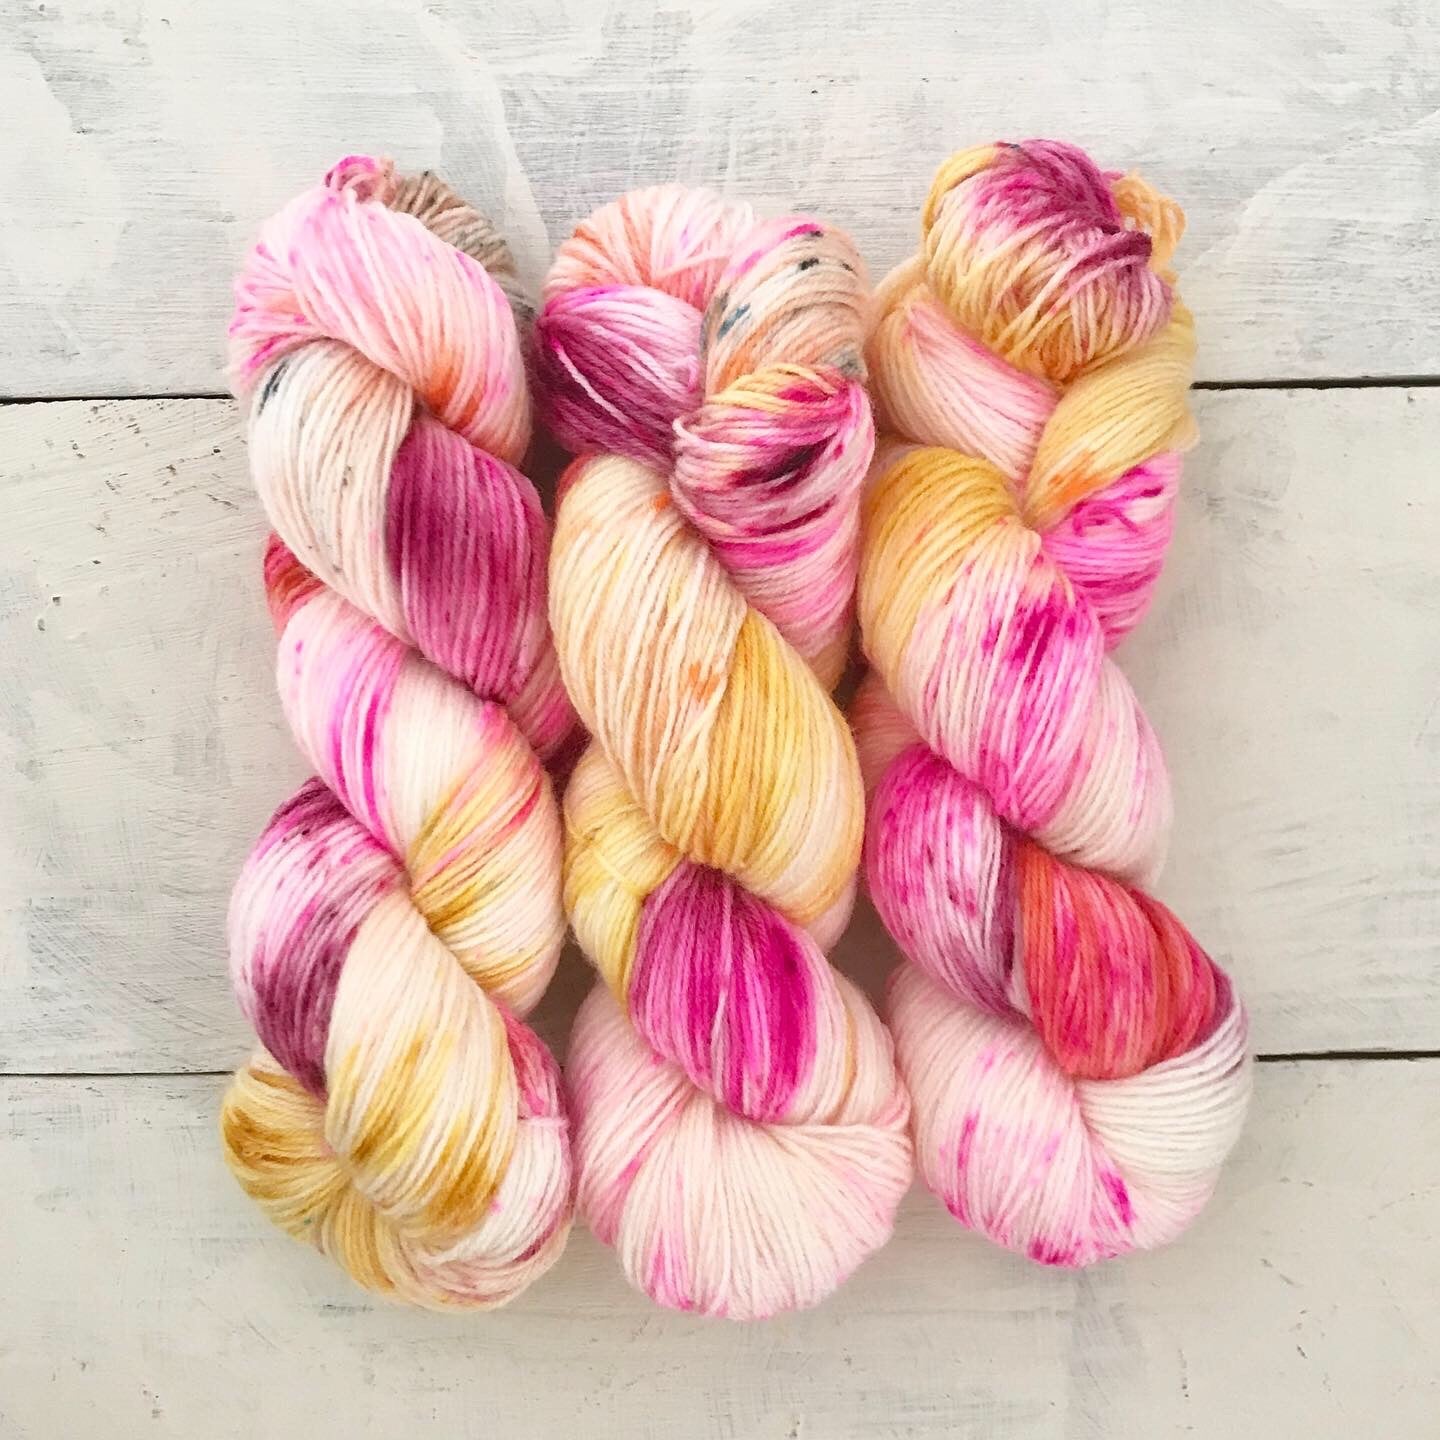 Hand-dyed yarn No.40 sock yarn "Opern-Soirée"